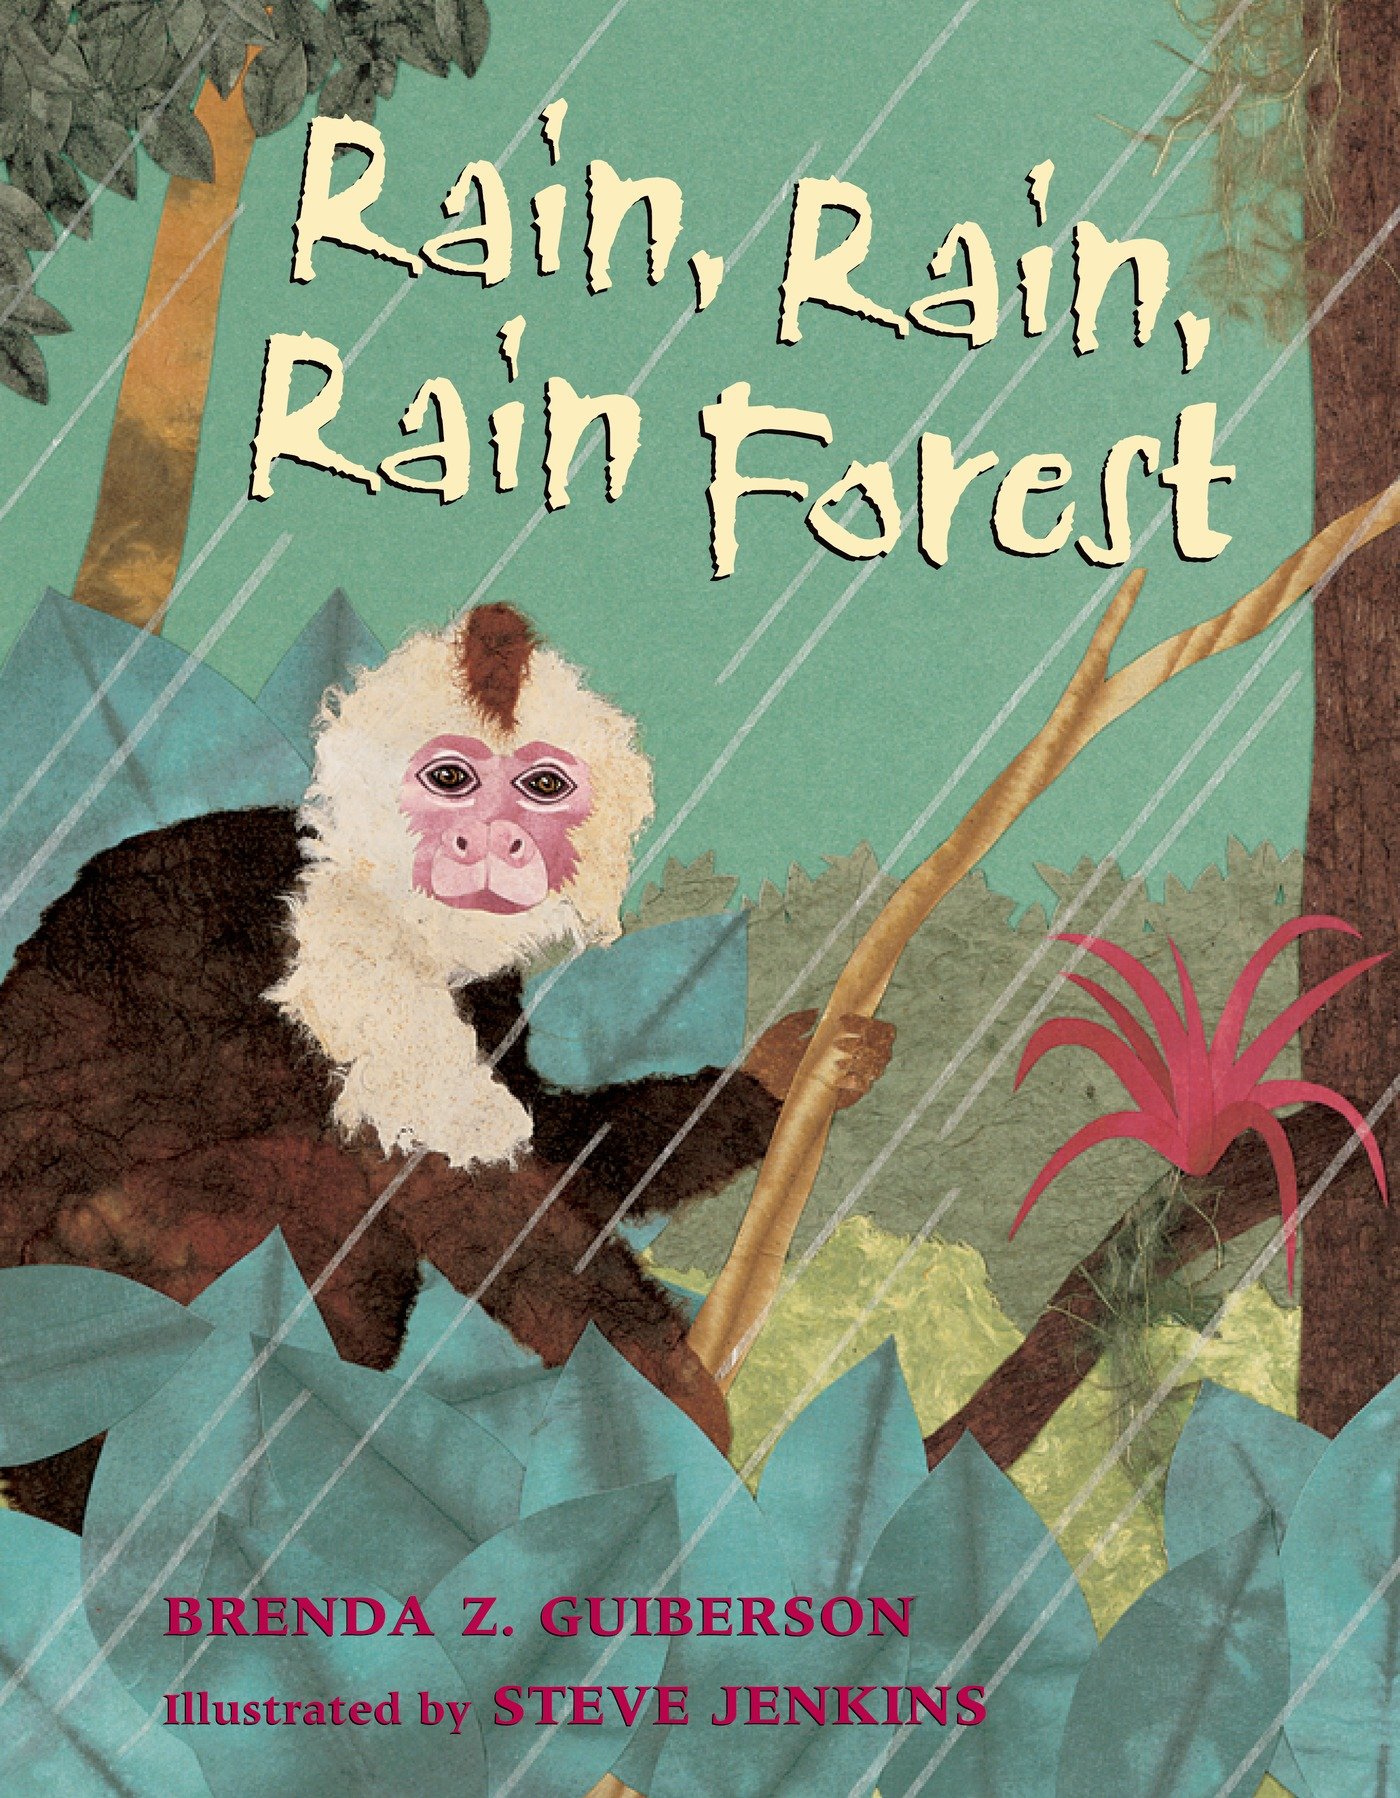 Children's Books on Costa Rica